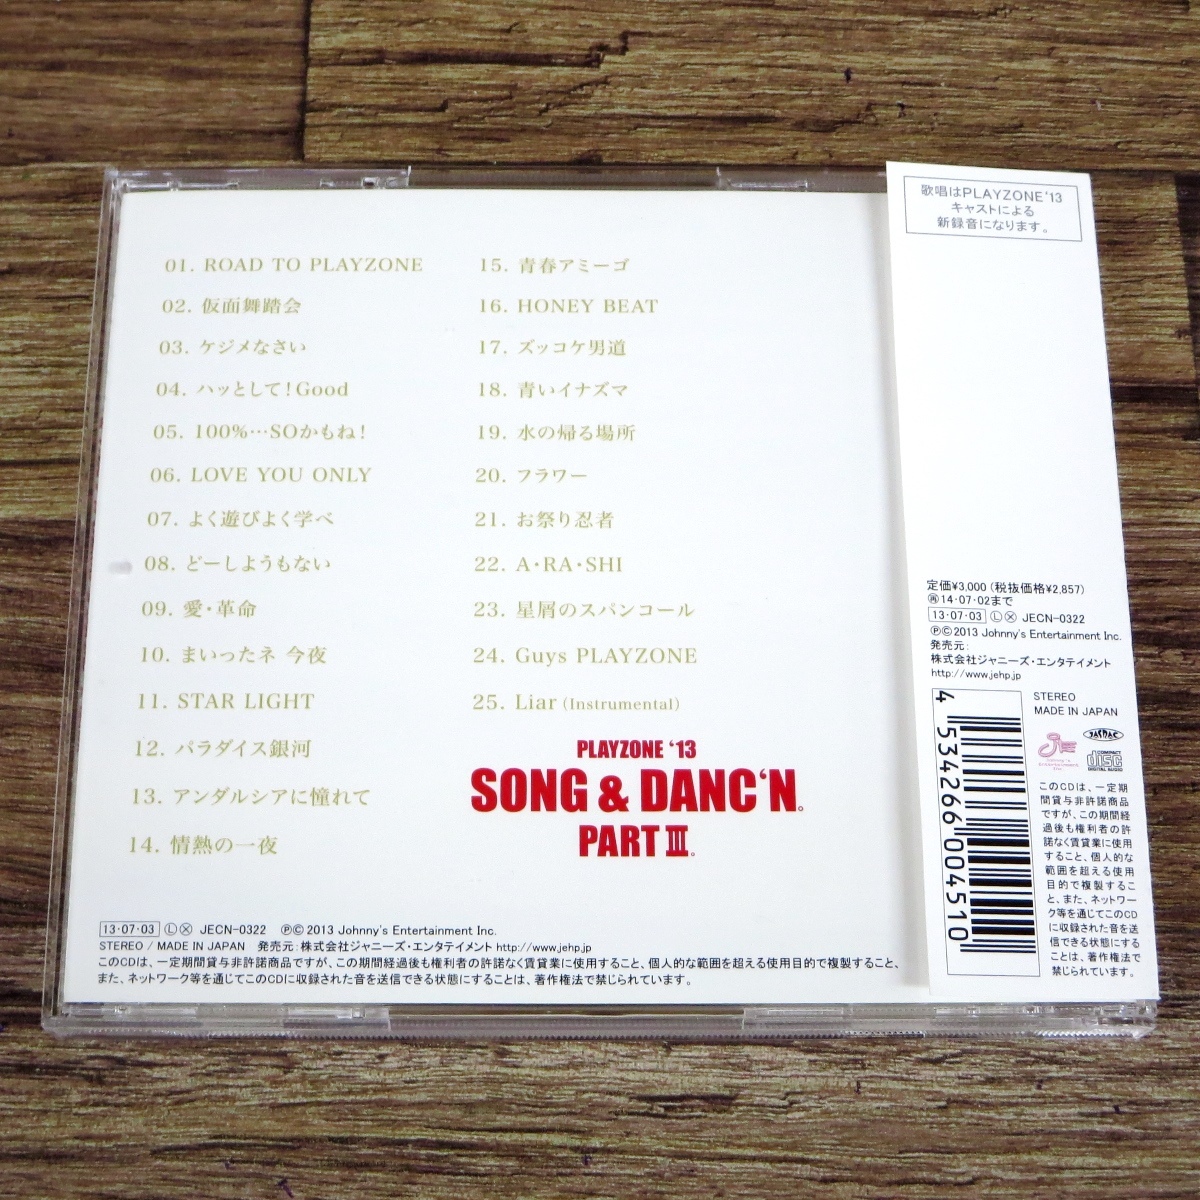 ◇PLAYZONE’11 ’12 ’13 SONG & DANC’N. PART Ⅰ Ⅱ Ⅲ オリジナル・サウンドトラック CD 3点セット◇z30441_画像5